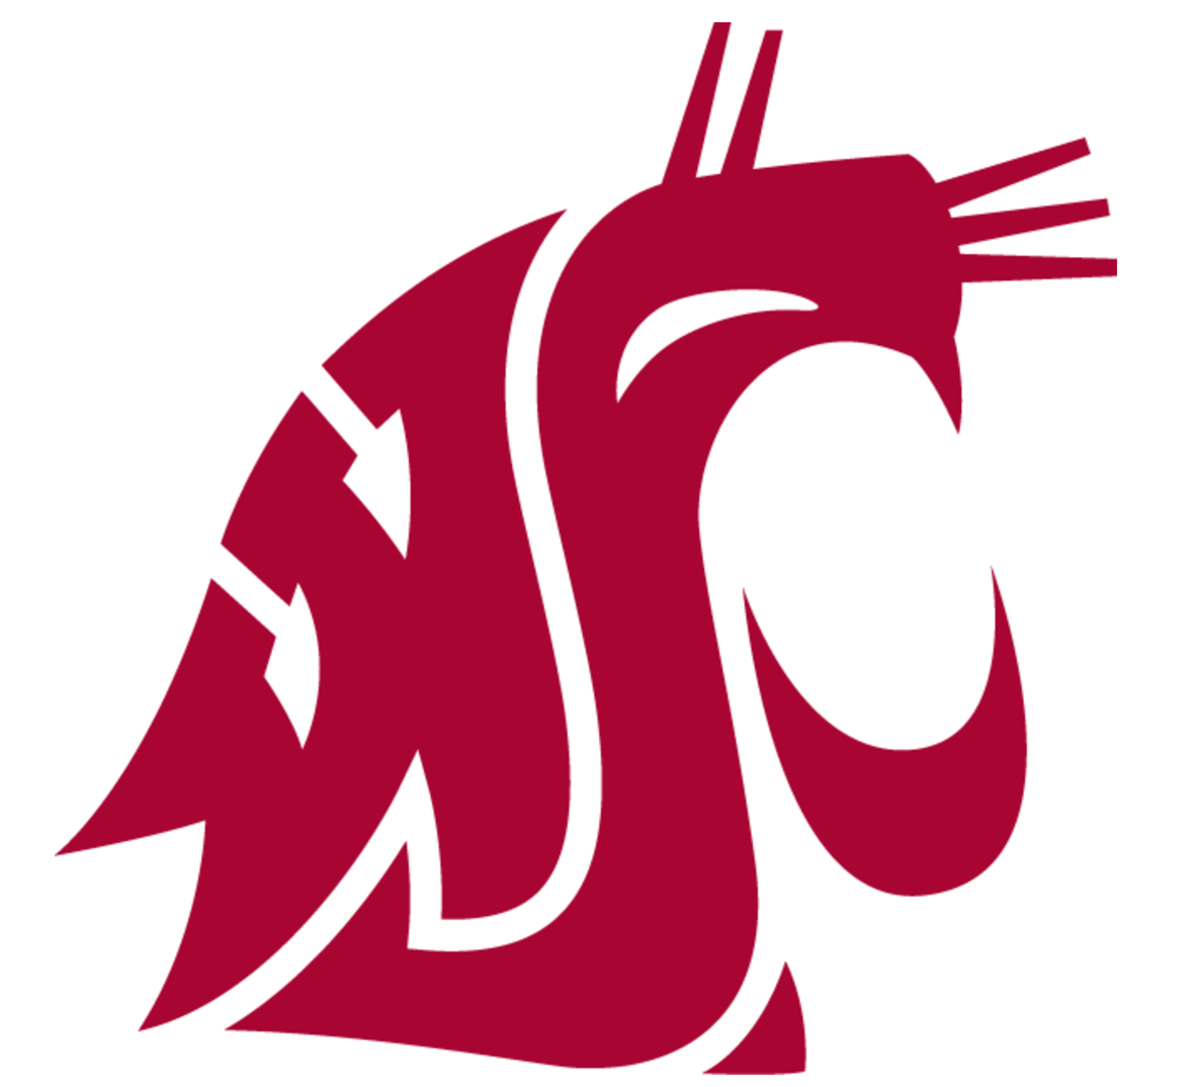 The Washington State Cougars logo.